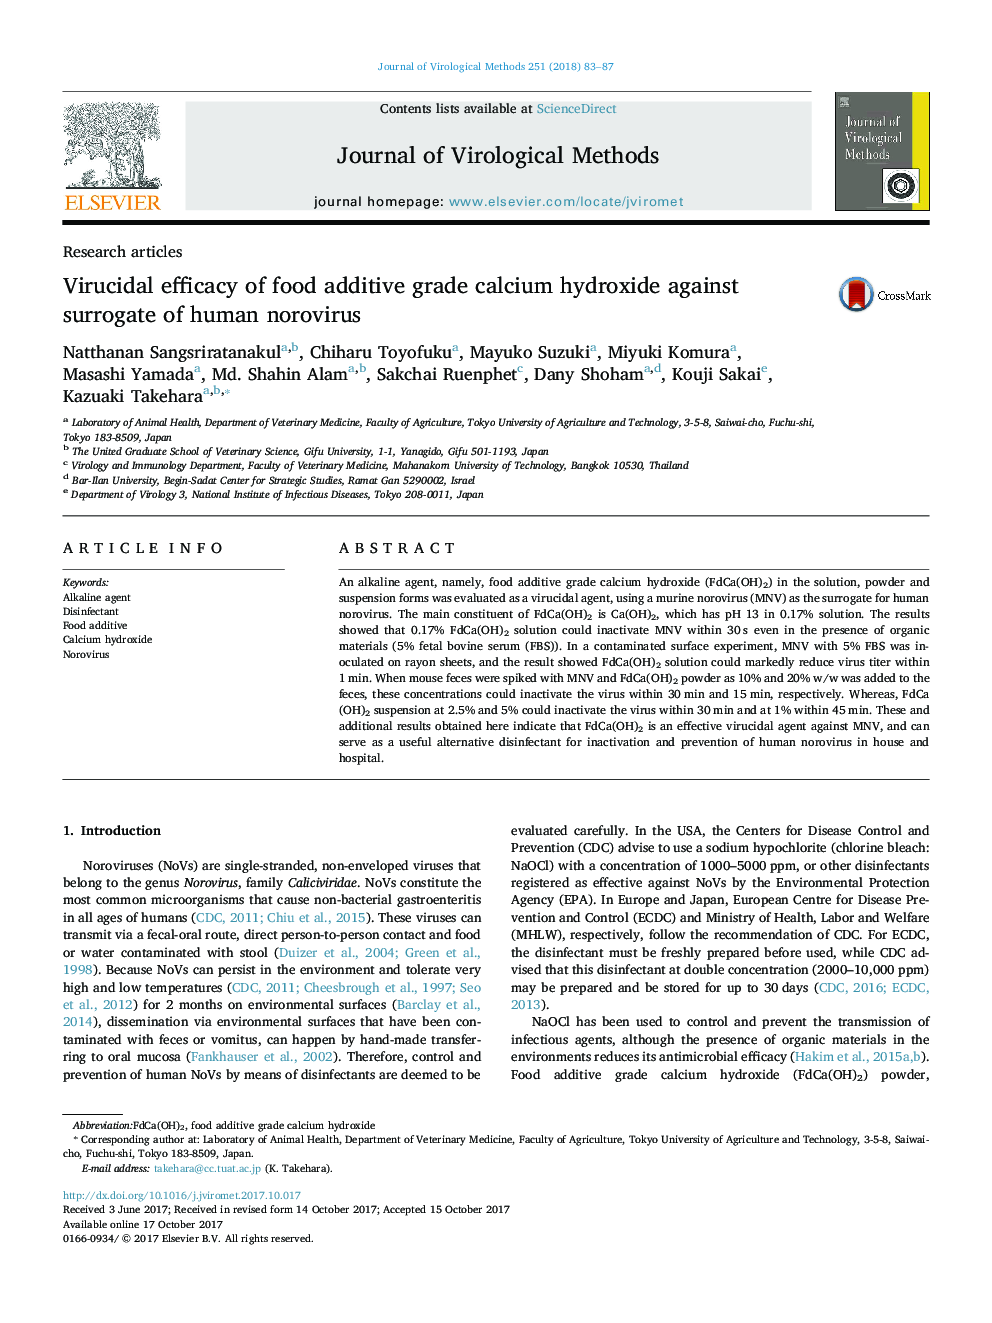 Virucidal efficacy of food additive grade calcium hydroxide against surrogate of human norovirus